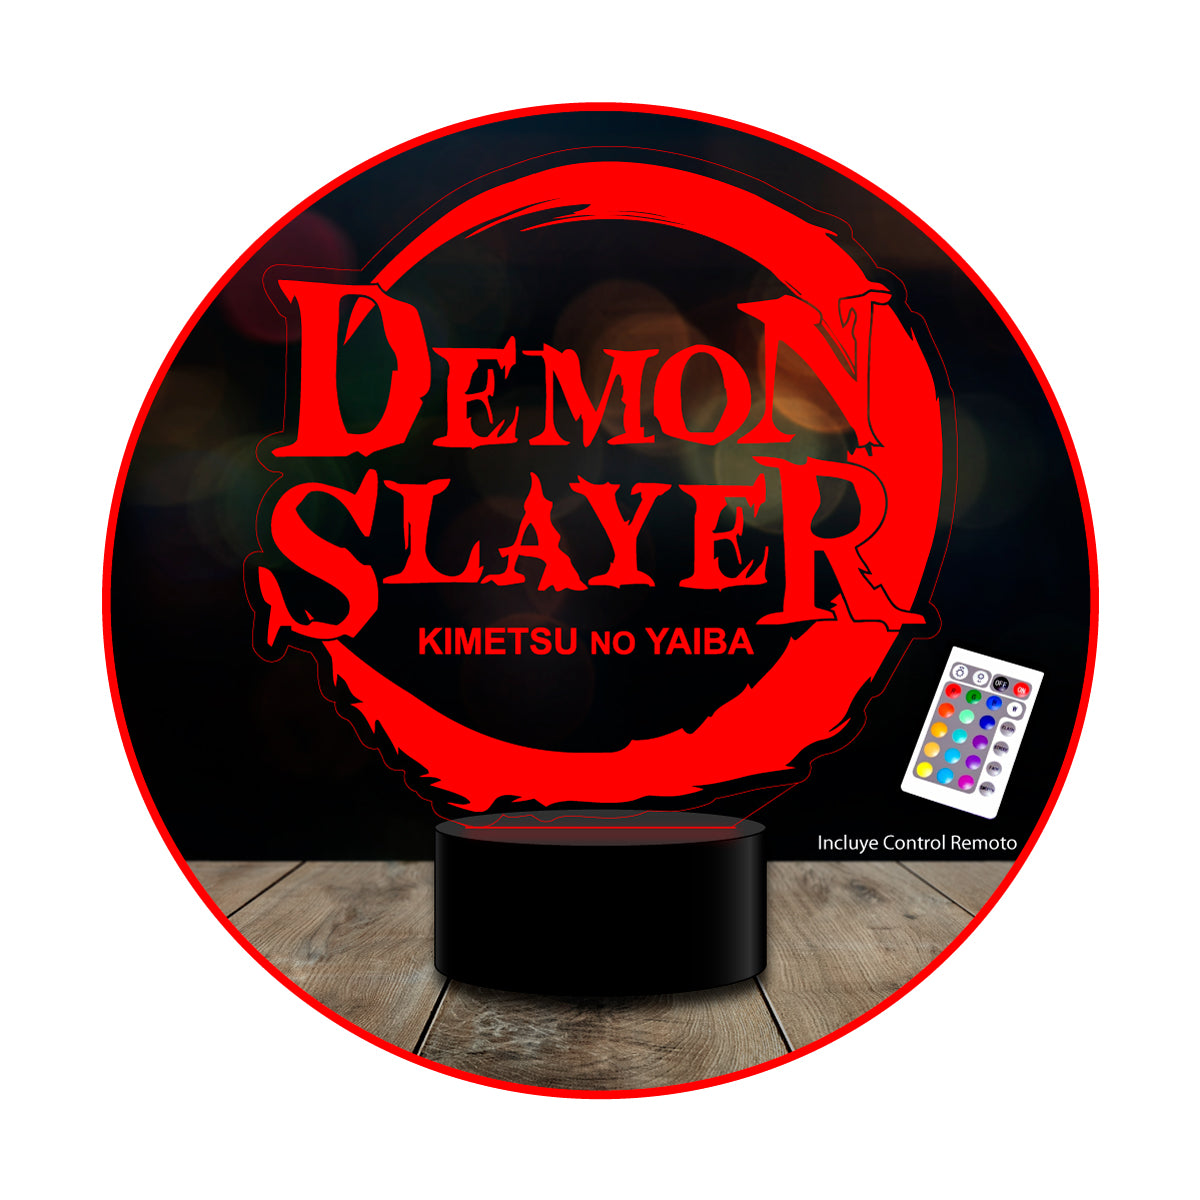 lampara 3D Demon Slayer anime 16 colores c/ remoto